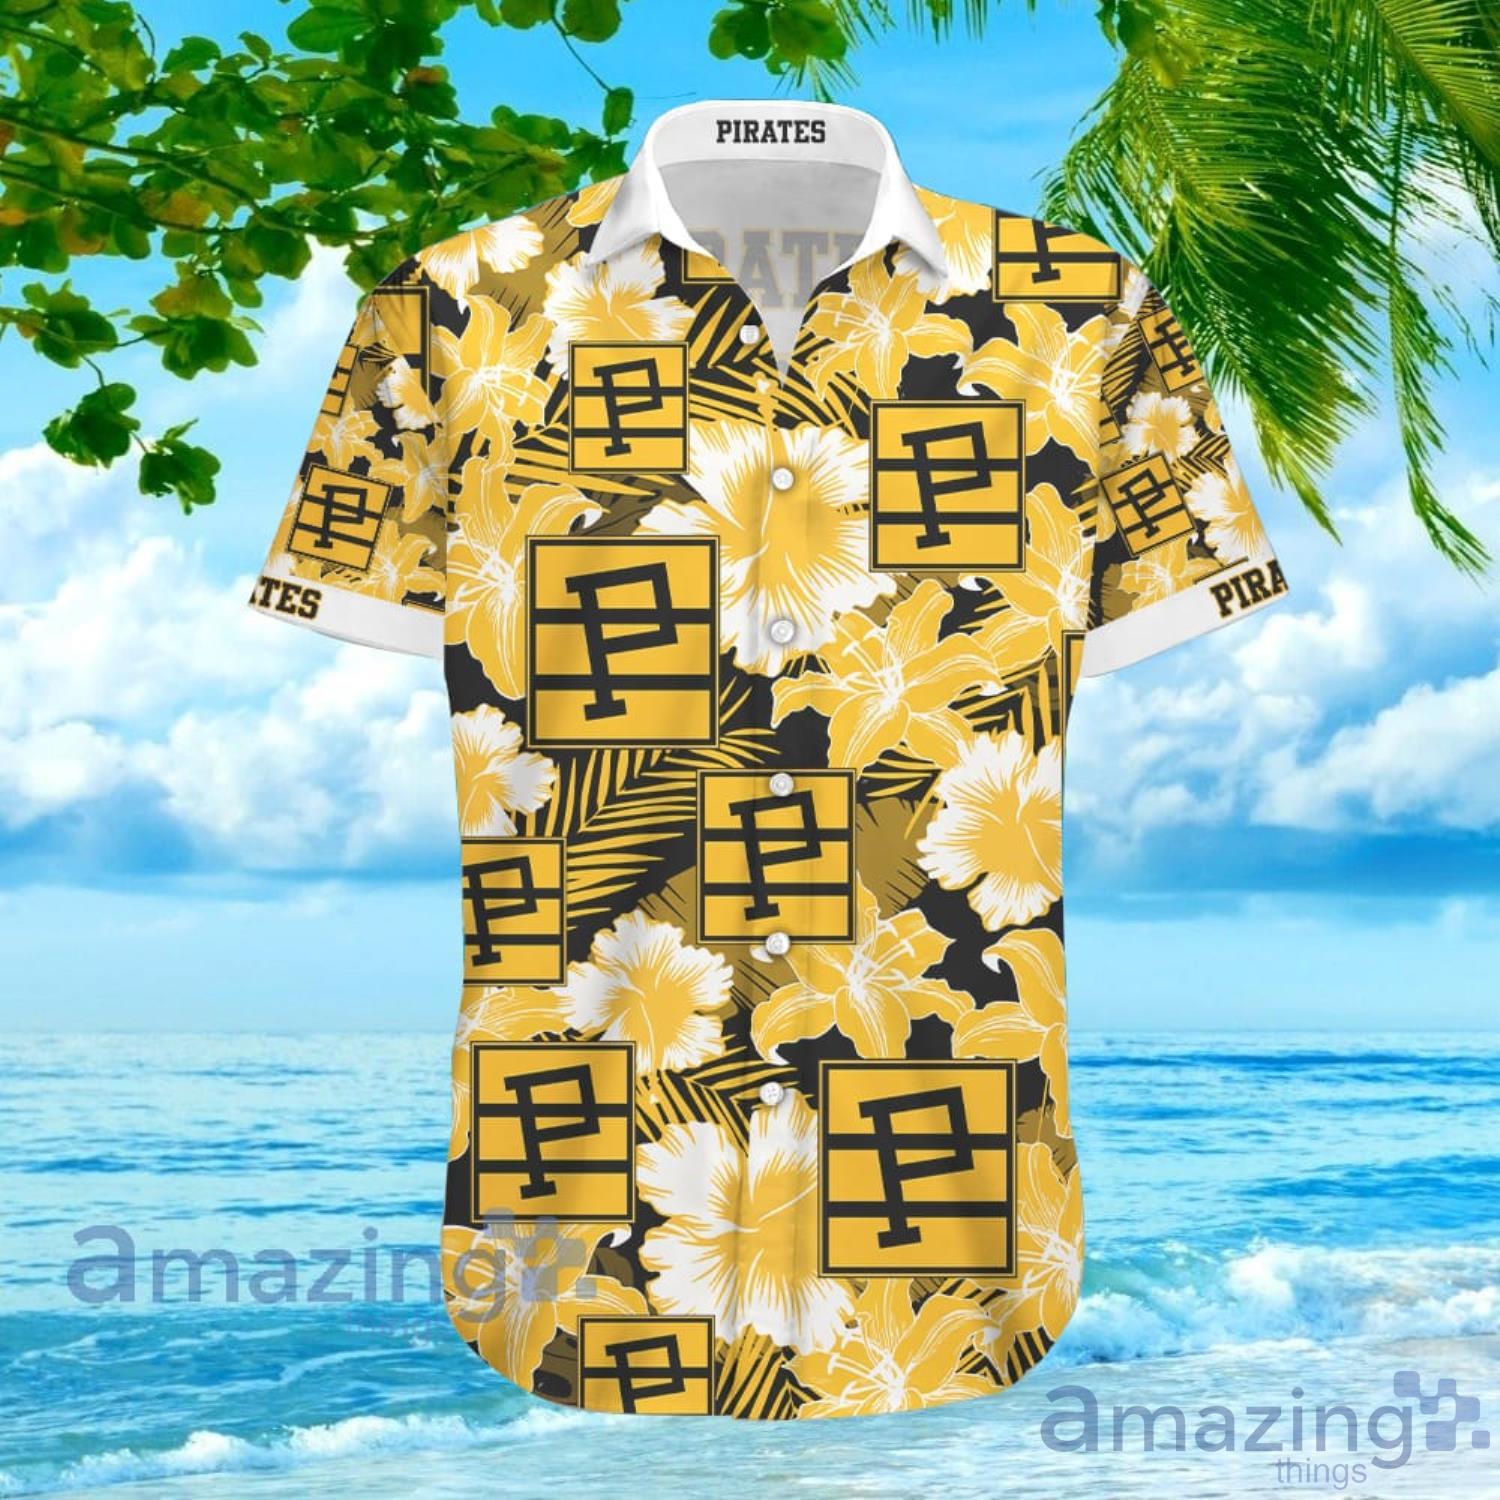 Custom Name Pittsburgh Pirates MLB Cheap Hawaiian Shirt - T-shirts Low Price